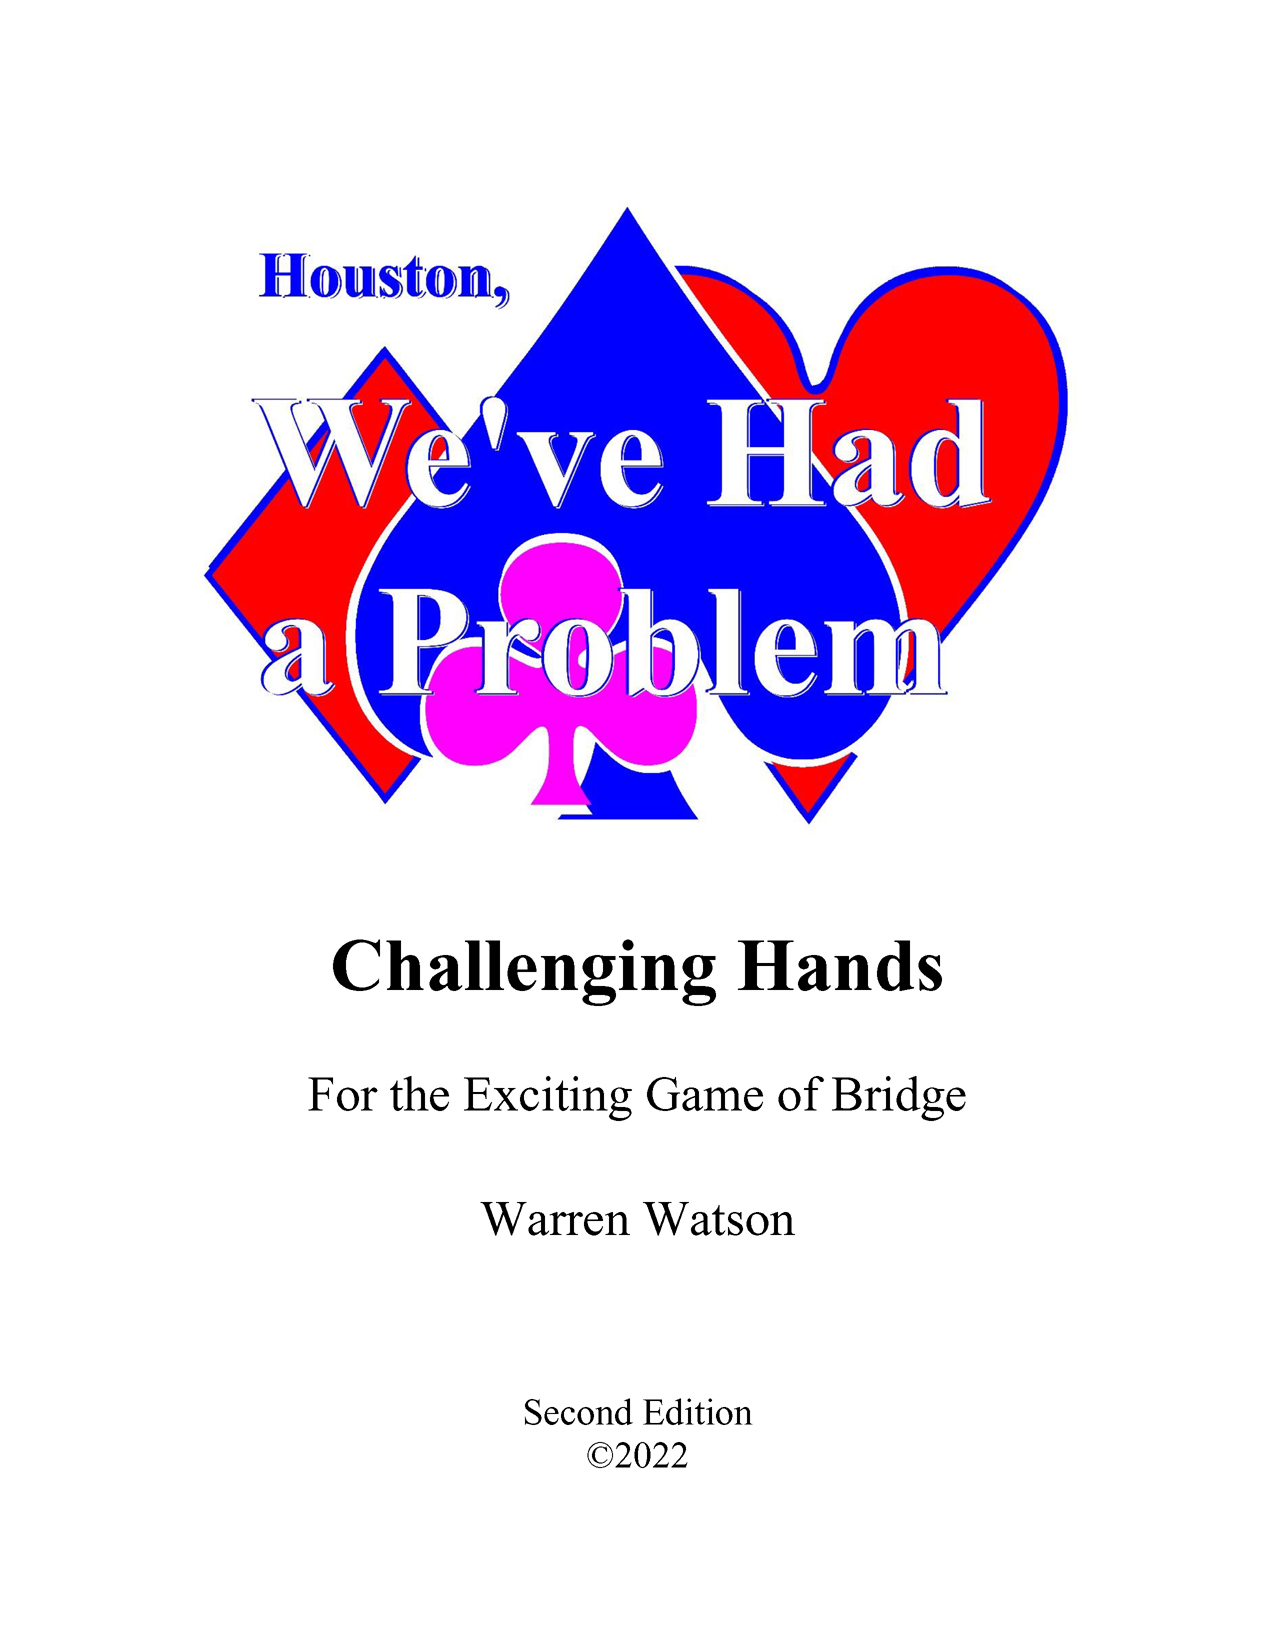 Houston, We've Had a Problem-Various Problem hands on BBO